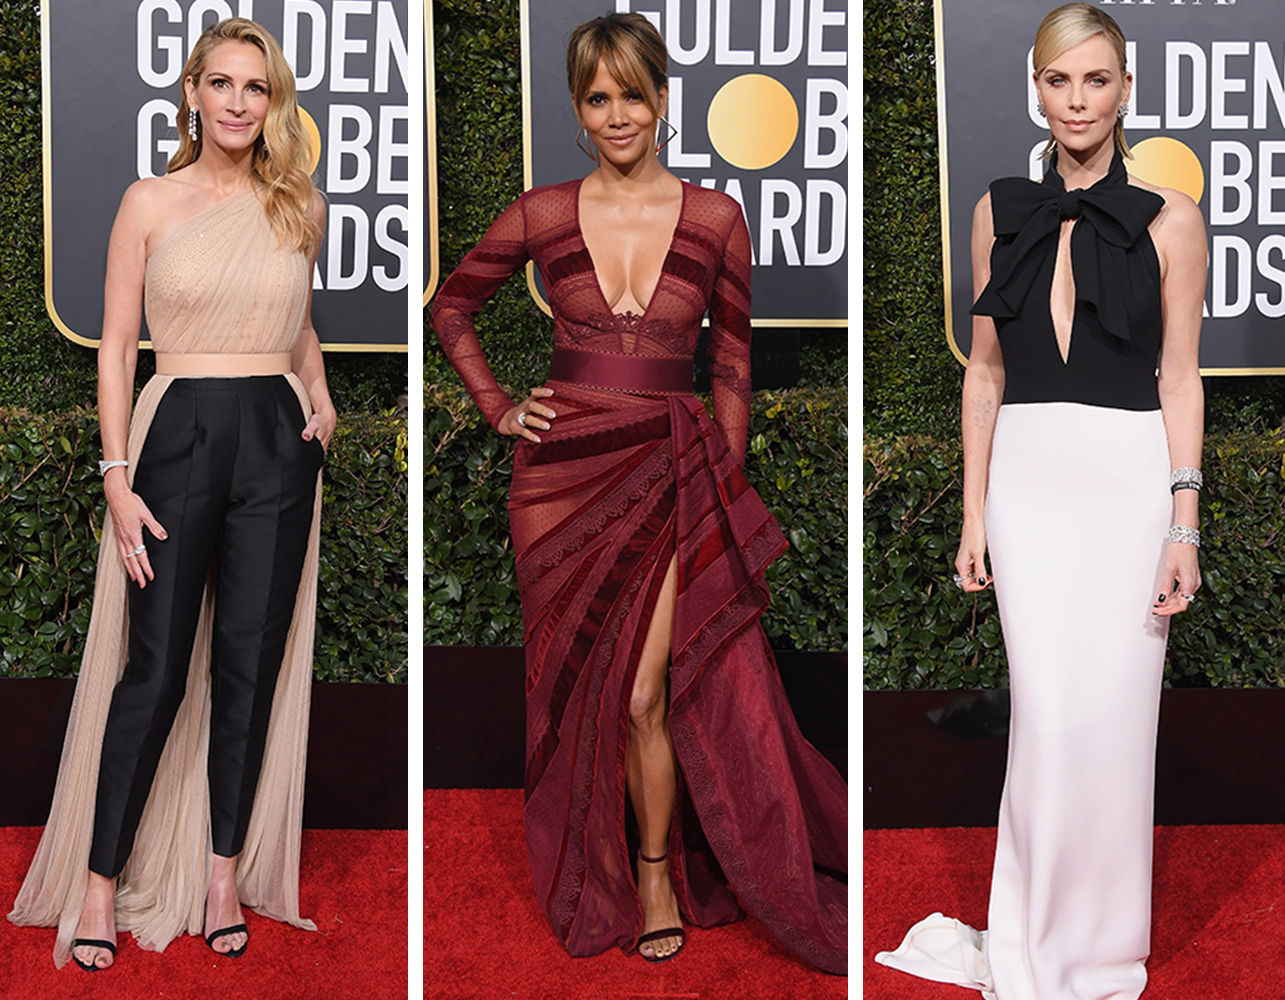 Golden Globe awards red carpet fashion Julia Roberts Halle Berry Charlize Theron